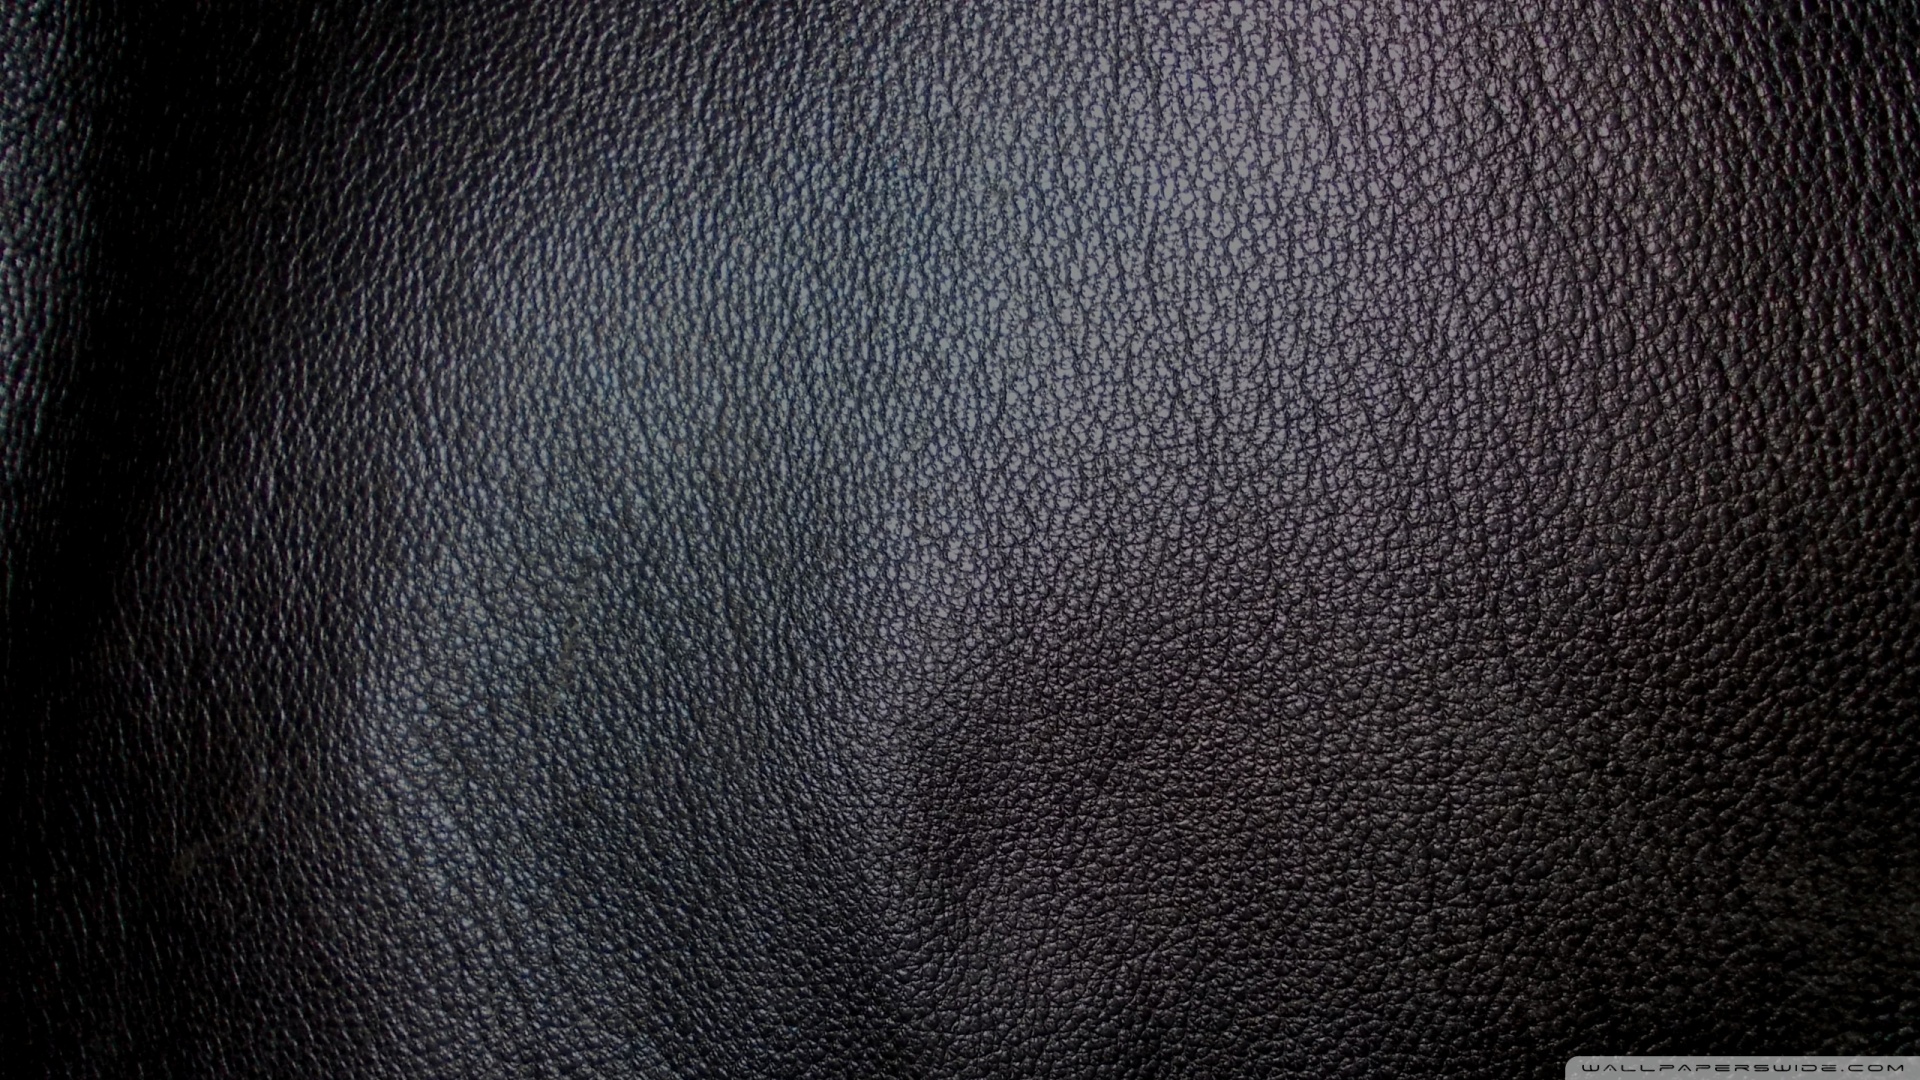 Black Leather Wallpaper